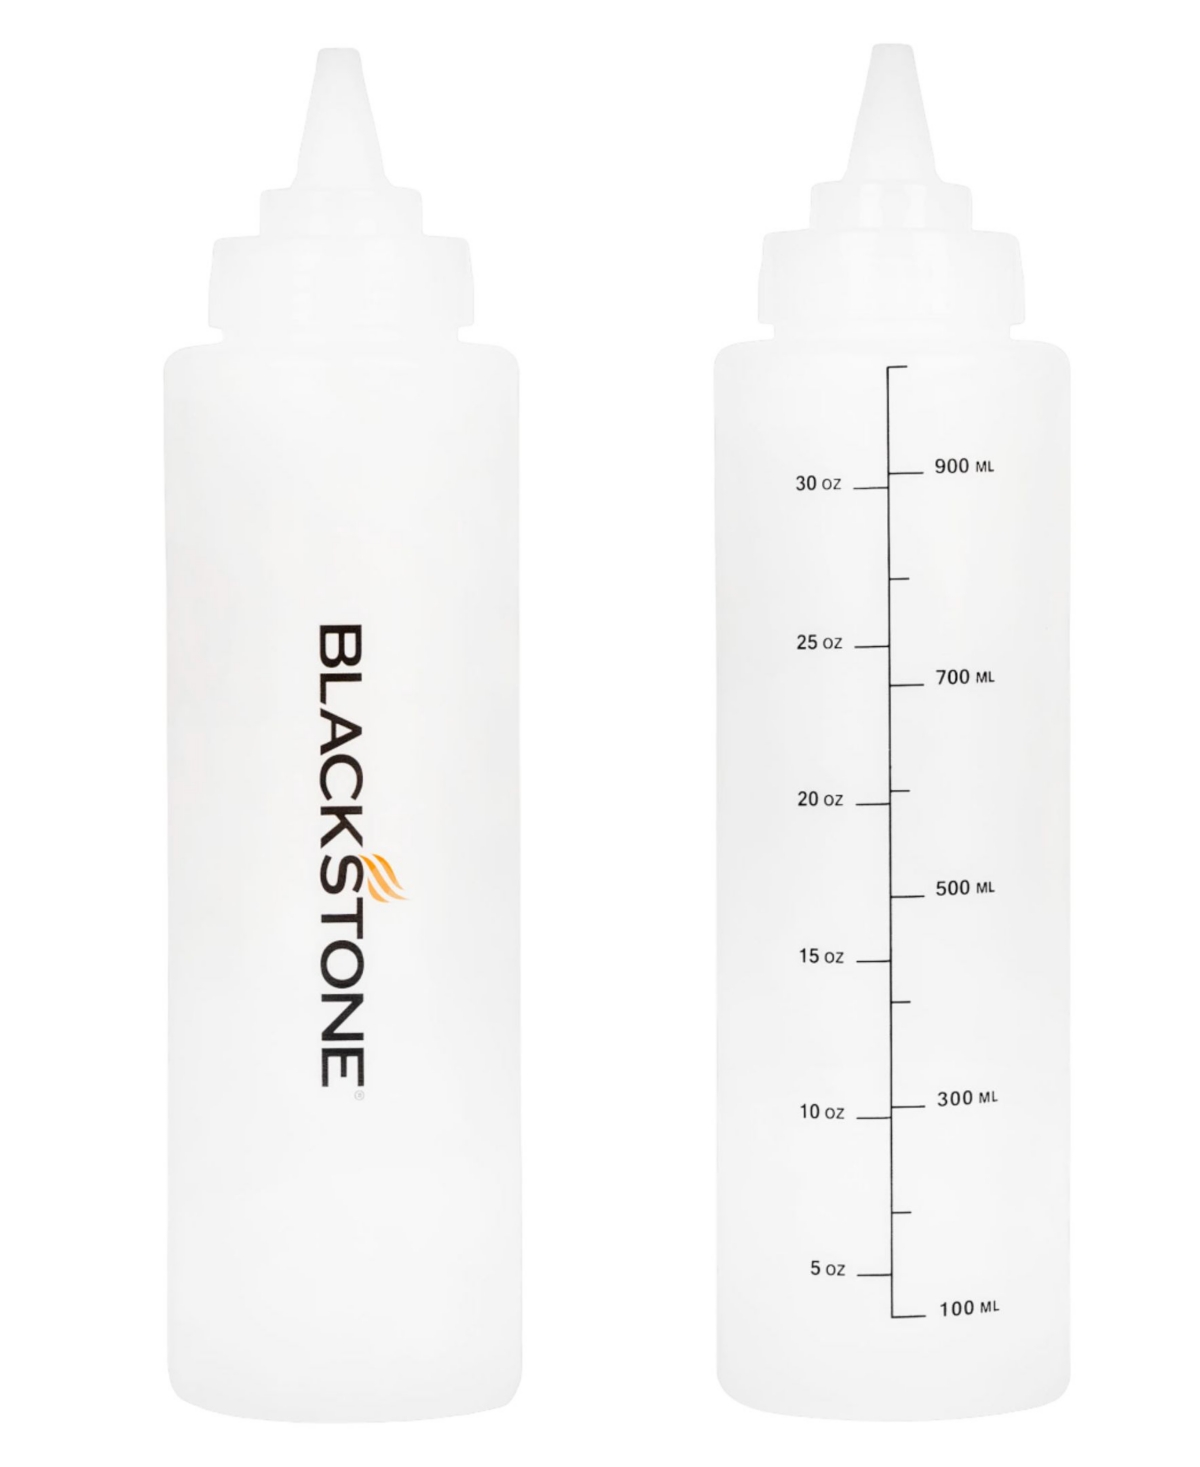 Plastic Bottle Set, 32 oz - Clear with Black Writing on Bottle